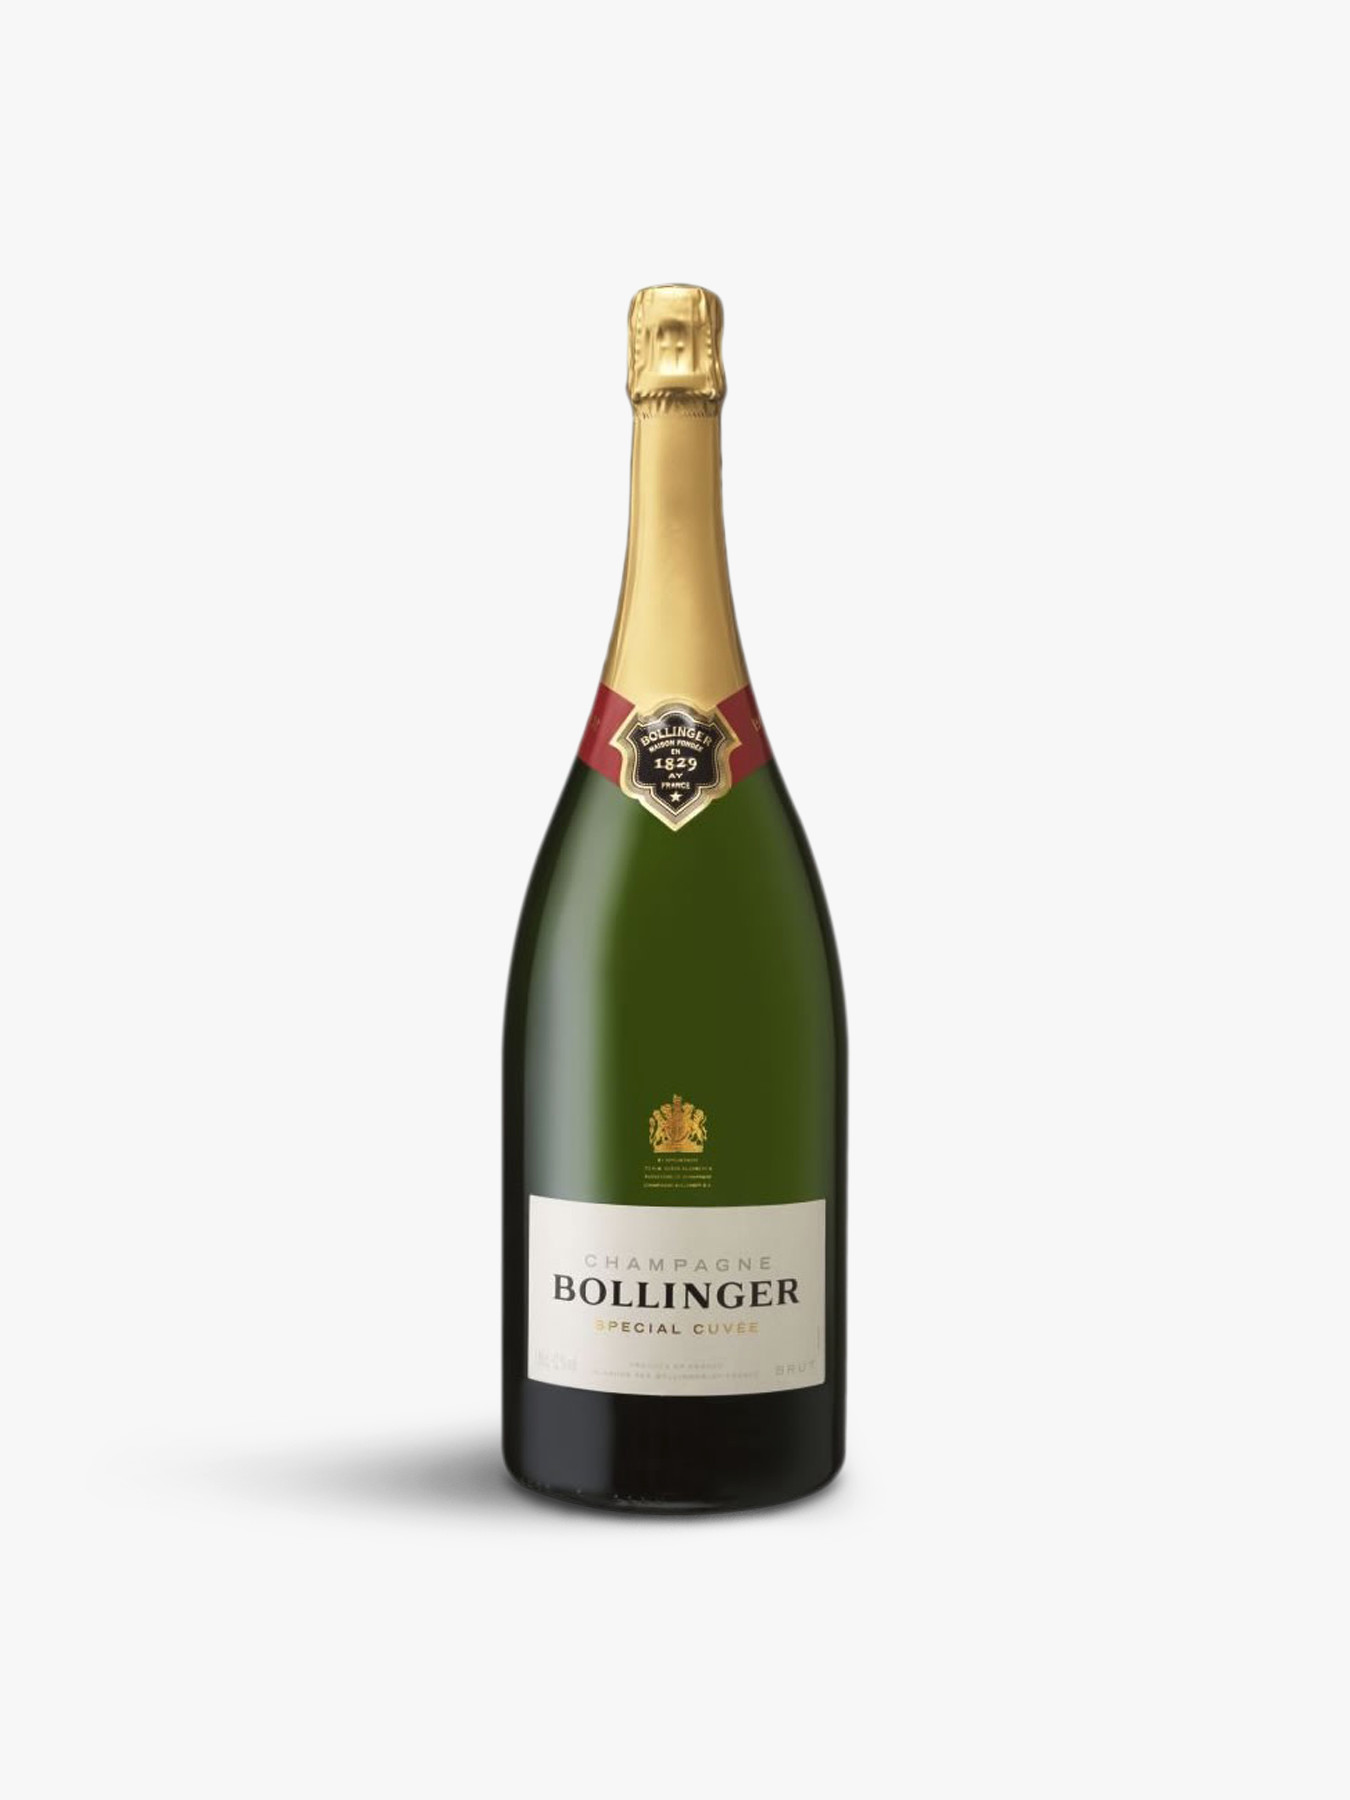 Champagne brut цена. Bollinger Special Cuvee Brut 0.75. Шампанское Cuvee Brut. Шампанское Просекко брют. Асти брют шампанское.